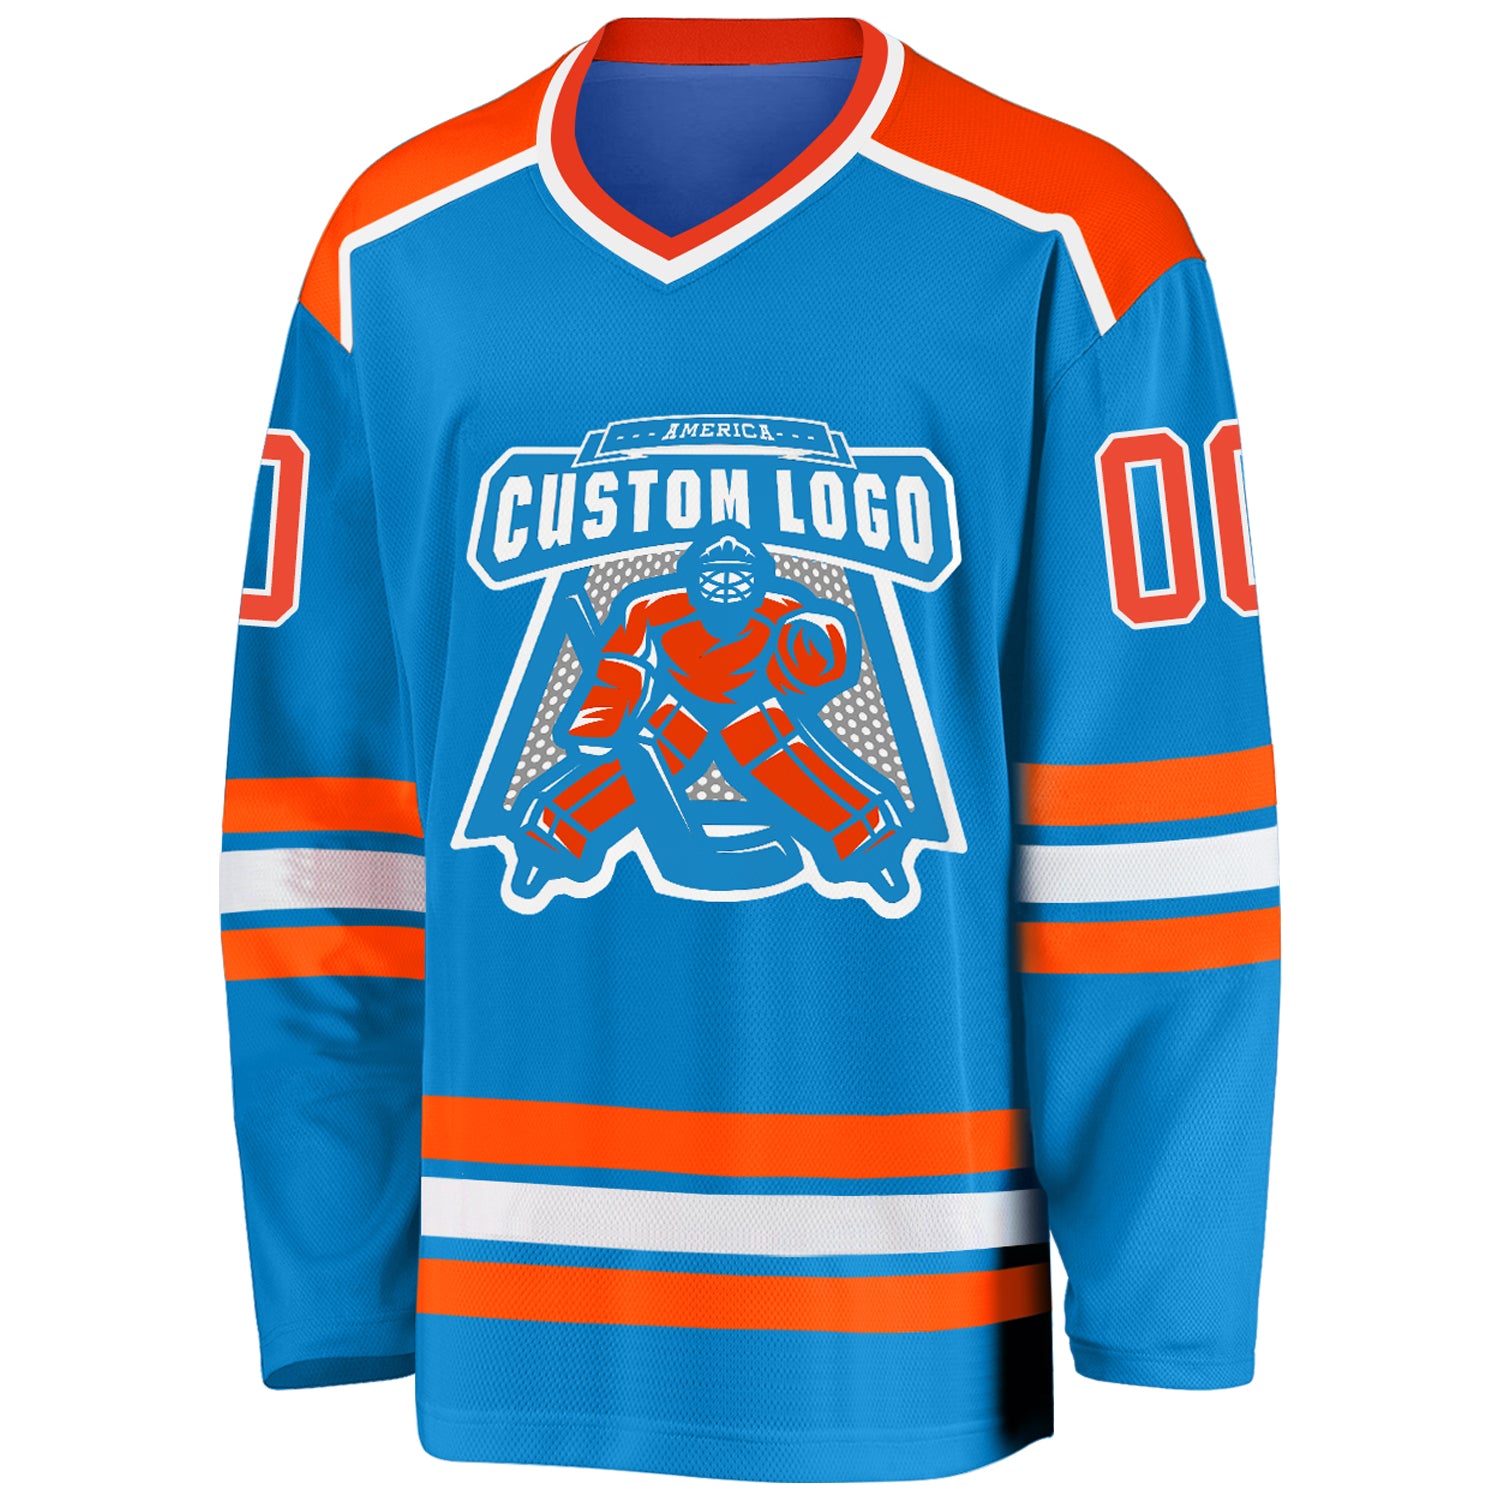 Custom Blue Orange-White Hockey Jersey